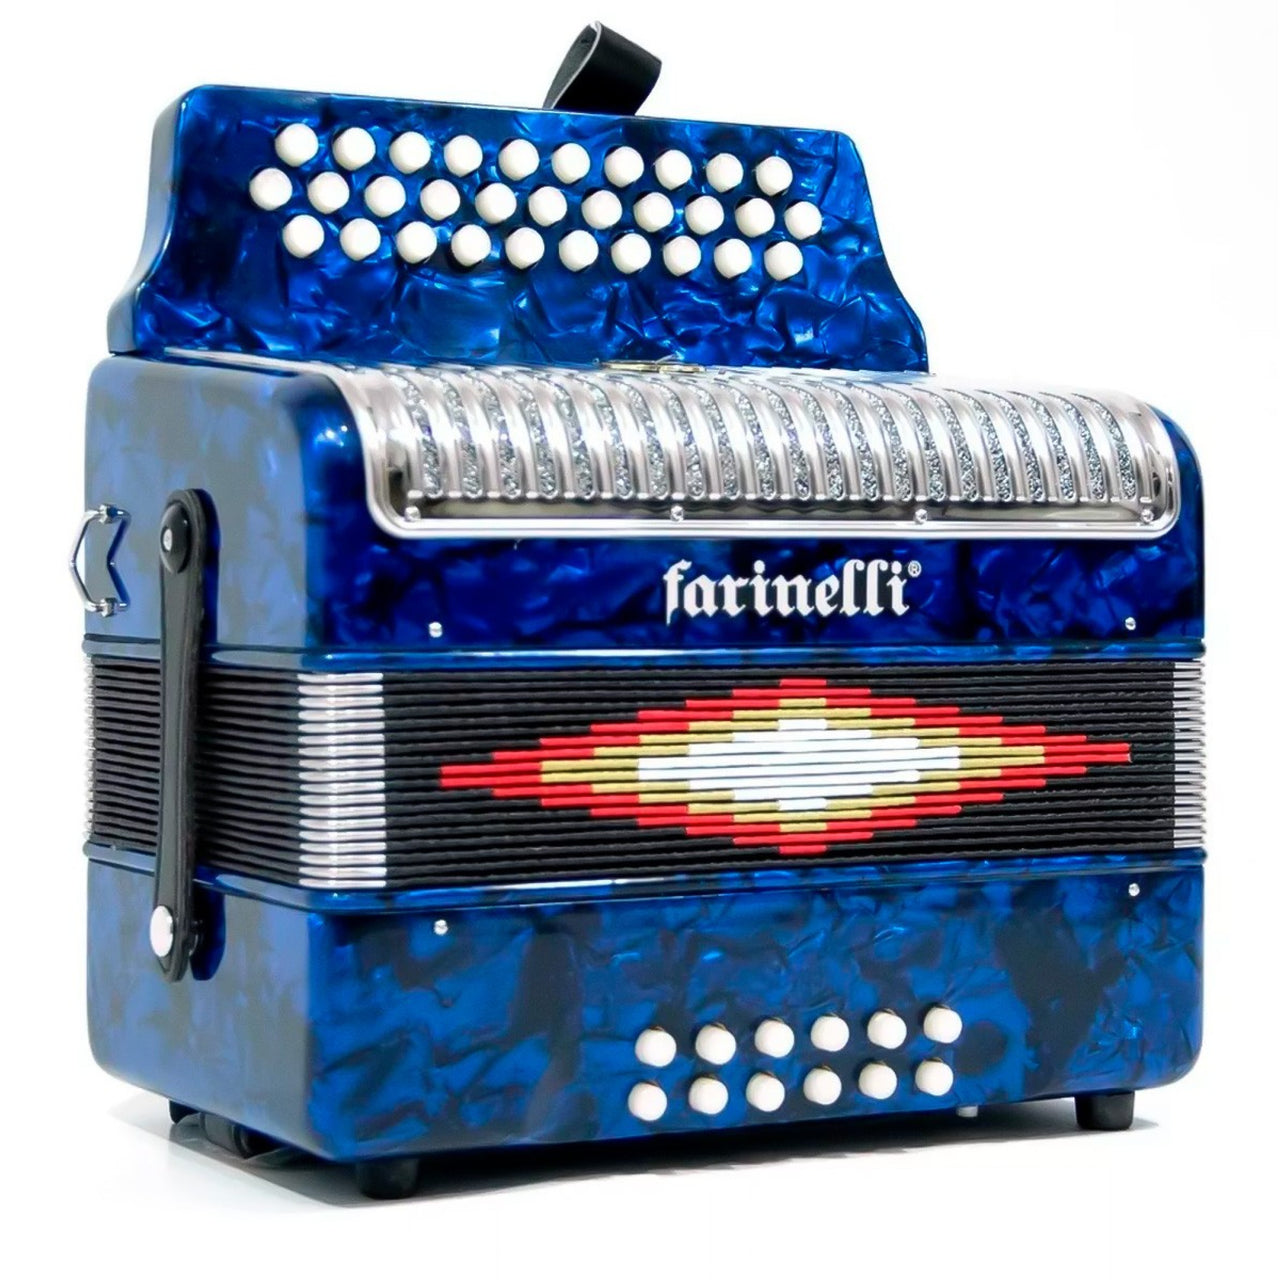 Acordeon Farinelli 3012faap De Botones Tono Fa Parrilla Metalica Azul